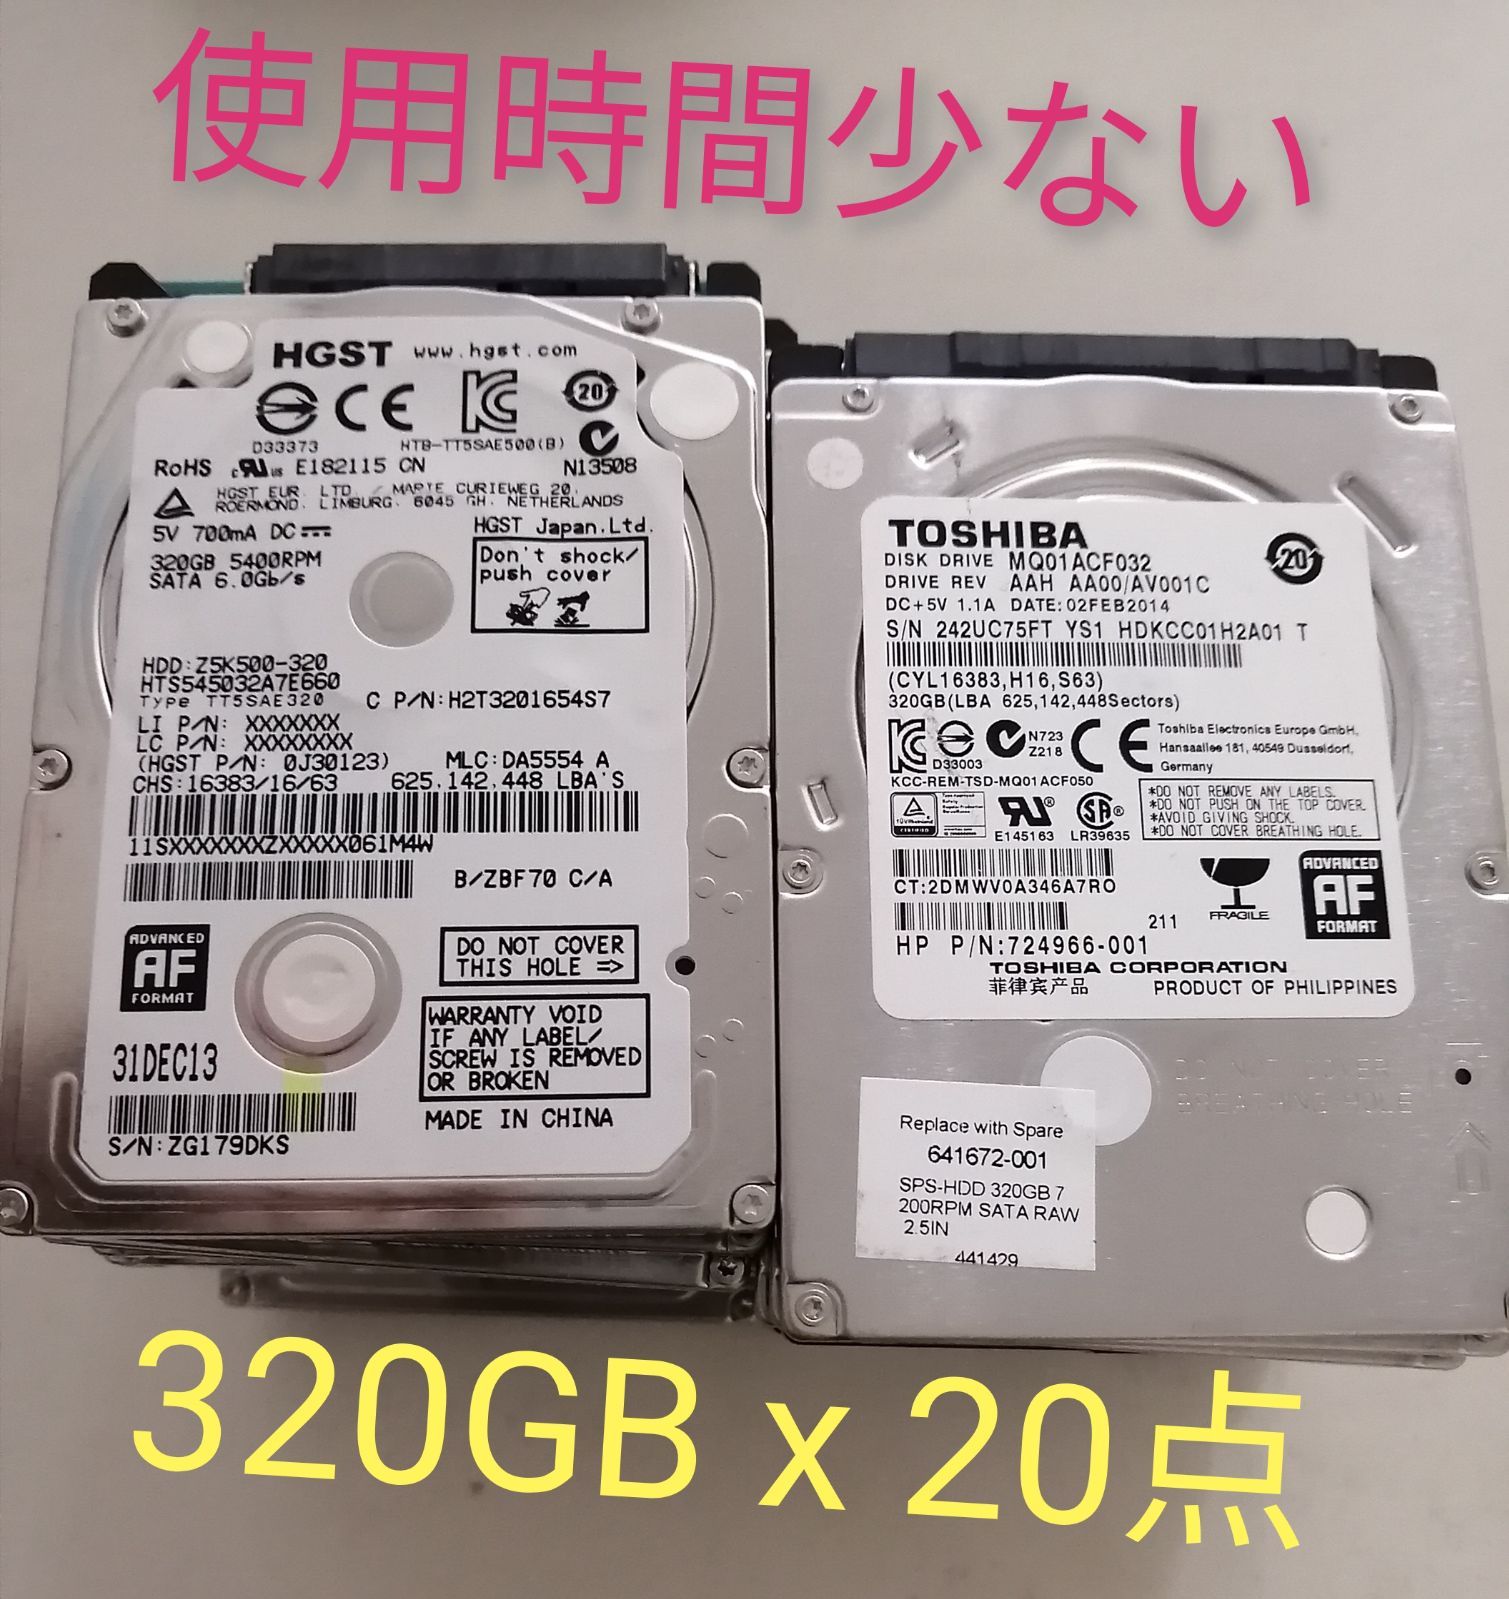 HDD TOSHIBA 320GB SATA 2.5インチ - 内蔵型ハードディスクドライブ